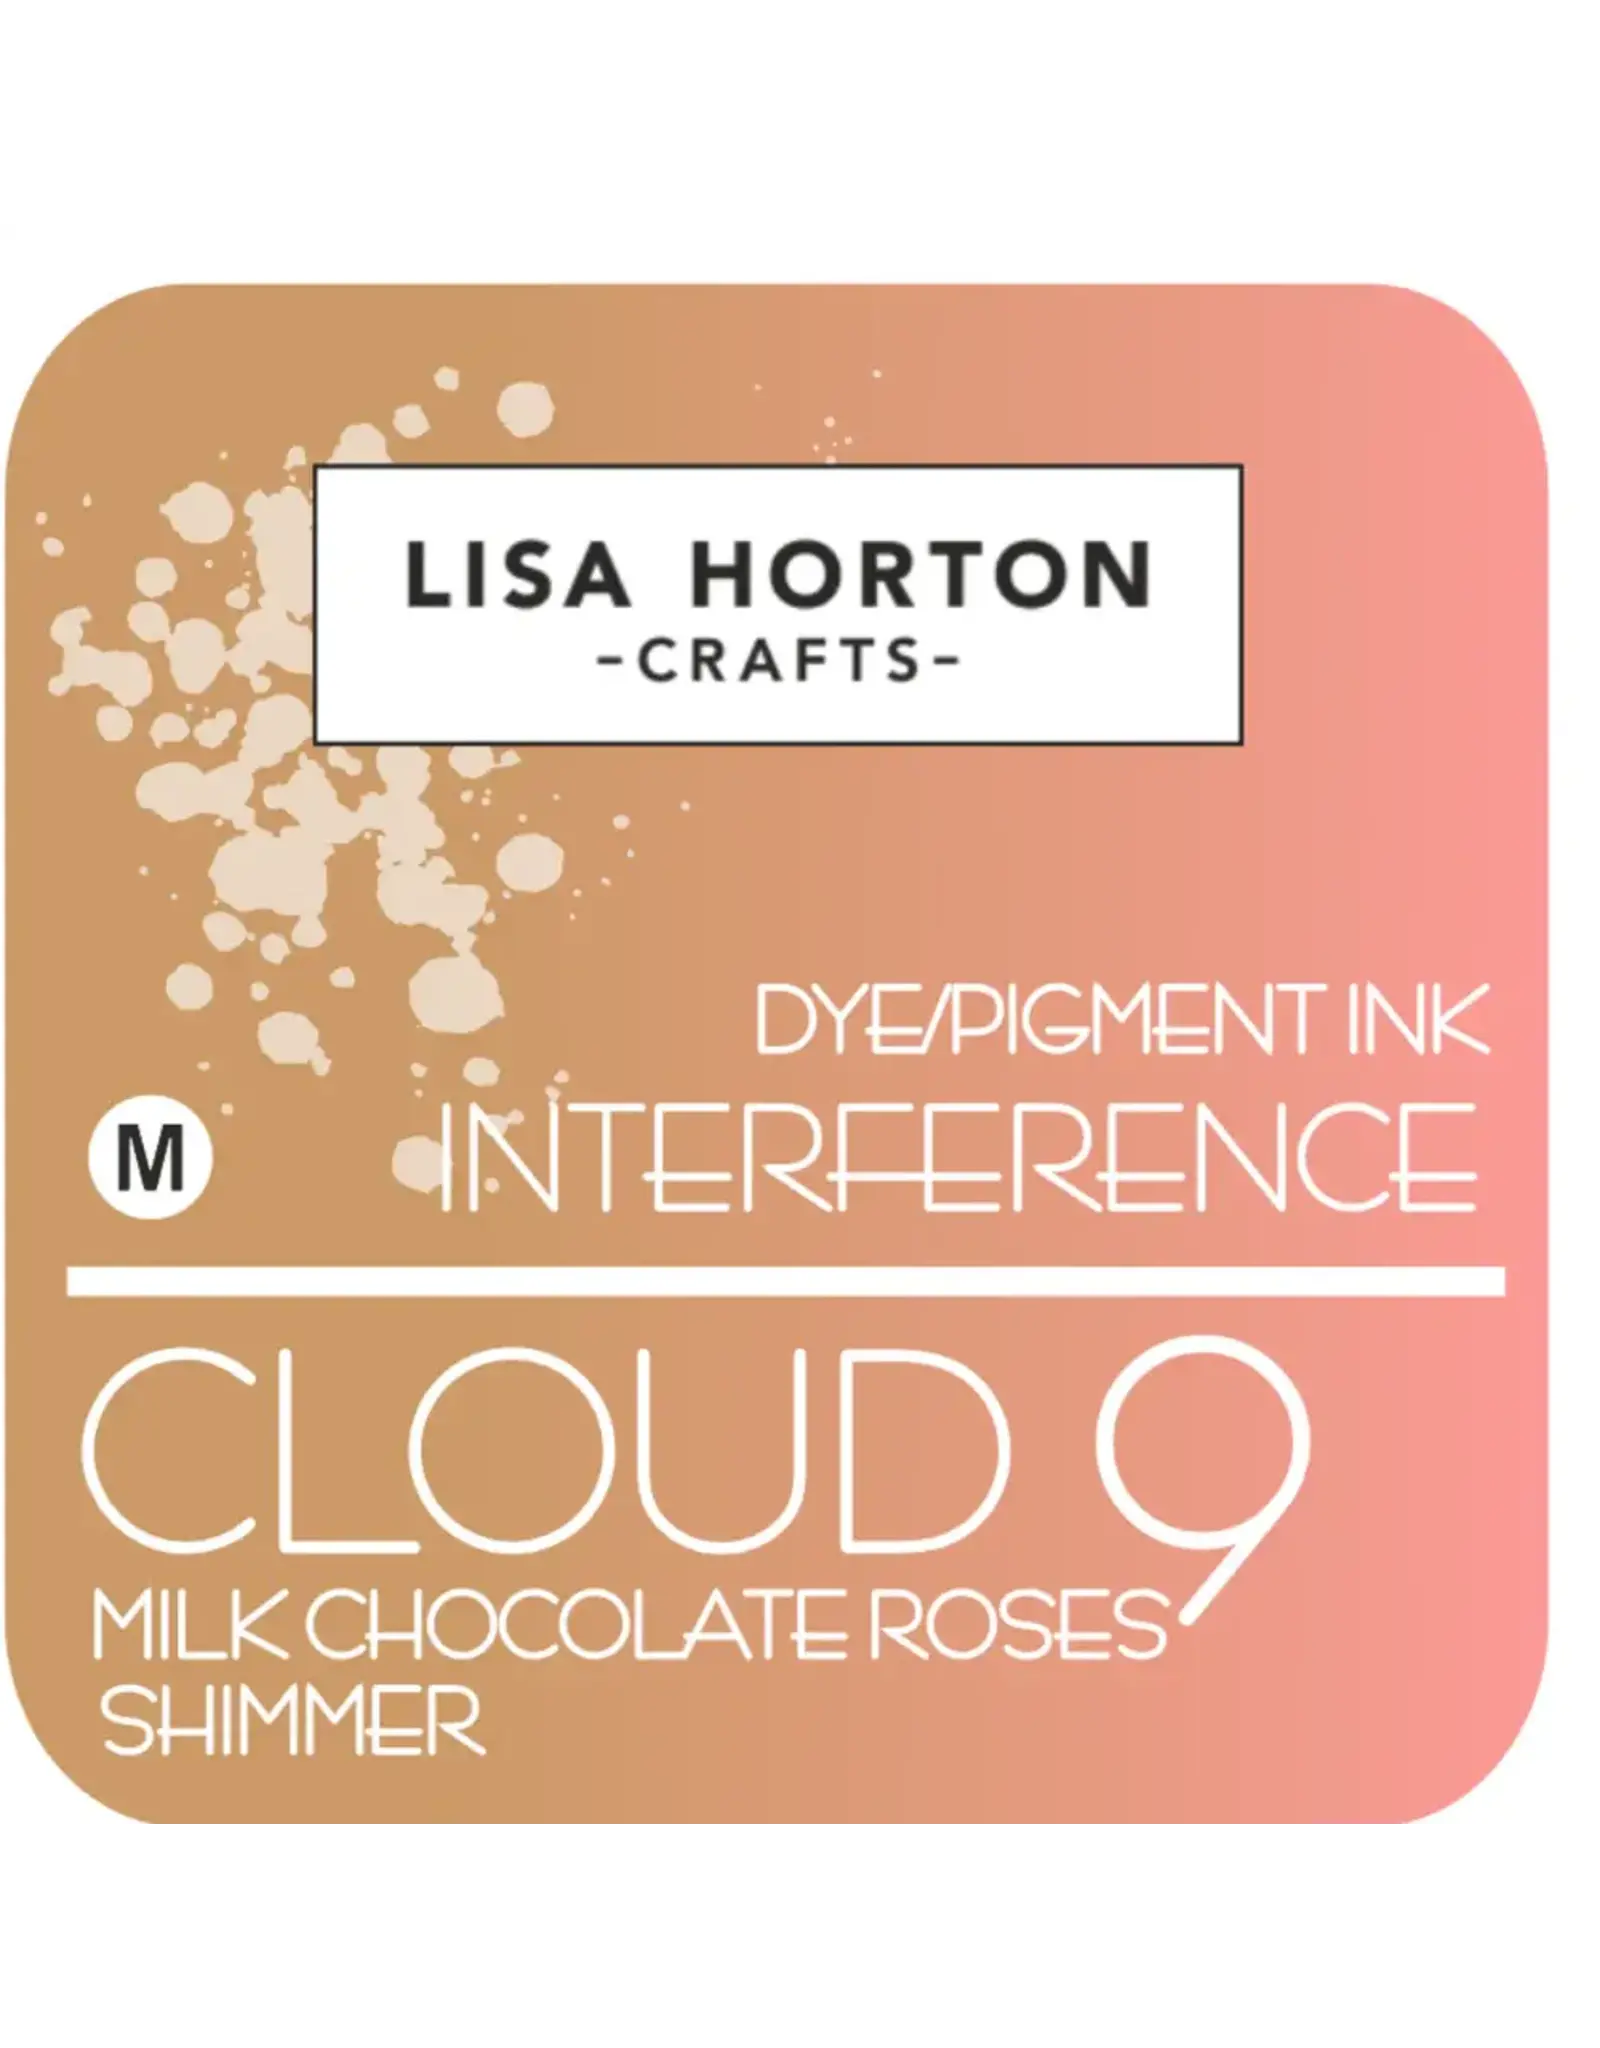 LISA HORTON CRAFTS LISA HORTON CRAFTS CLOUD 9 INTERFERENCE DYE/PIGMENT INK - MILK CHOCOLATE ROSES SHIMMER